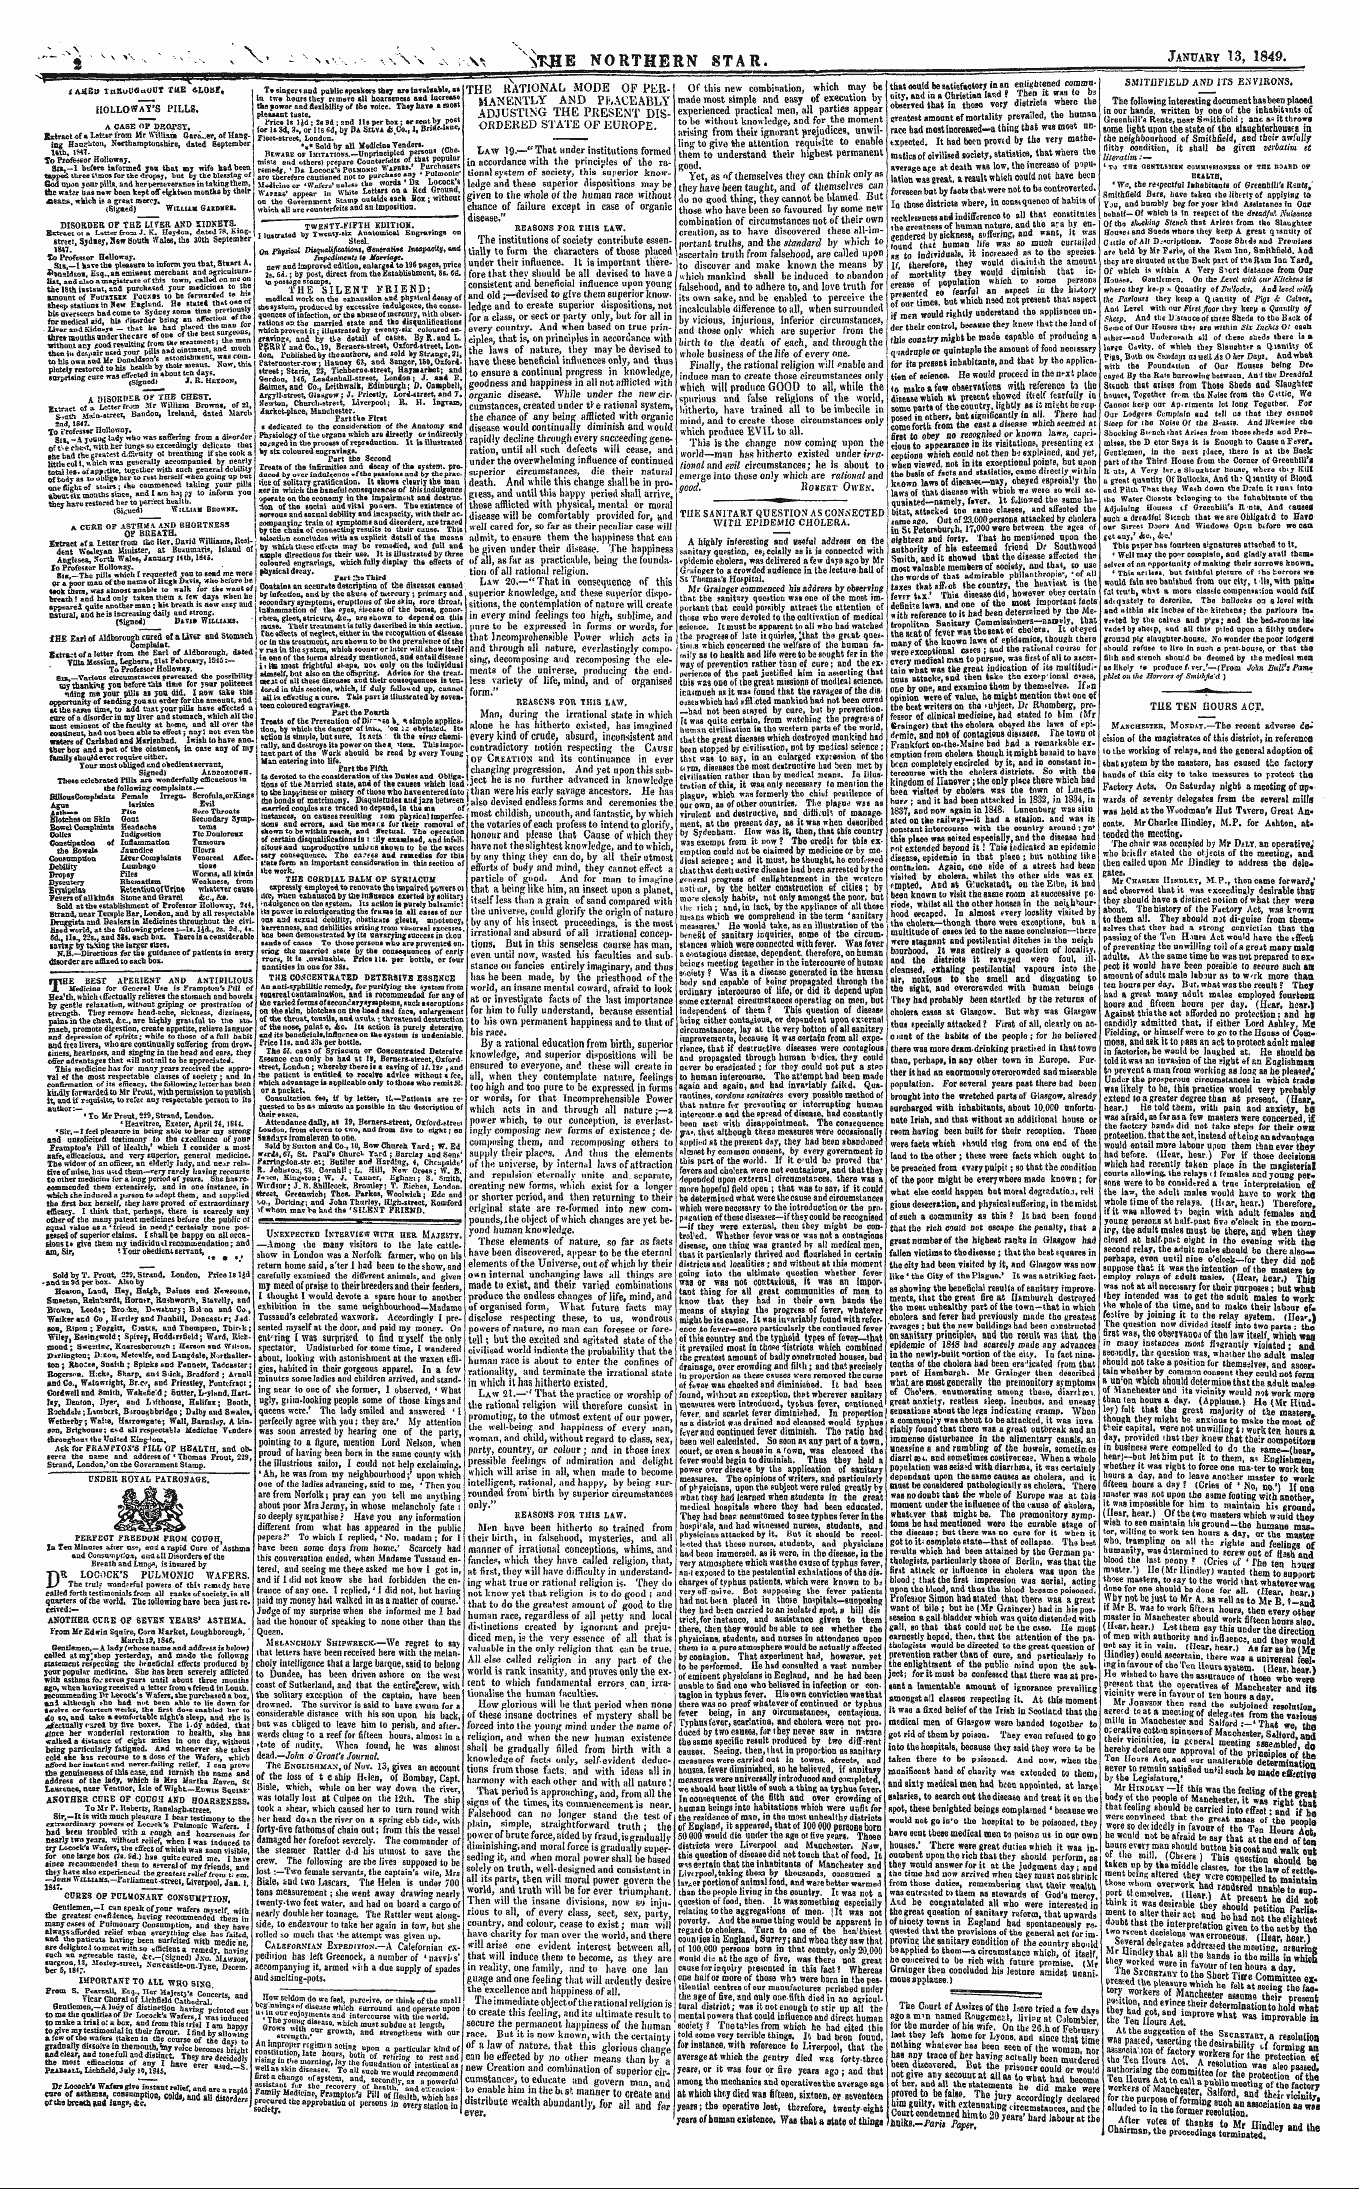 Northern Star (1837-1852): jS F Y, 3rd edition - Ad00214